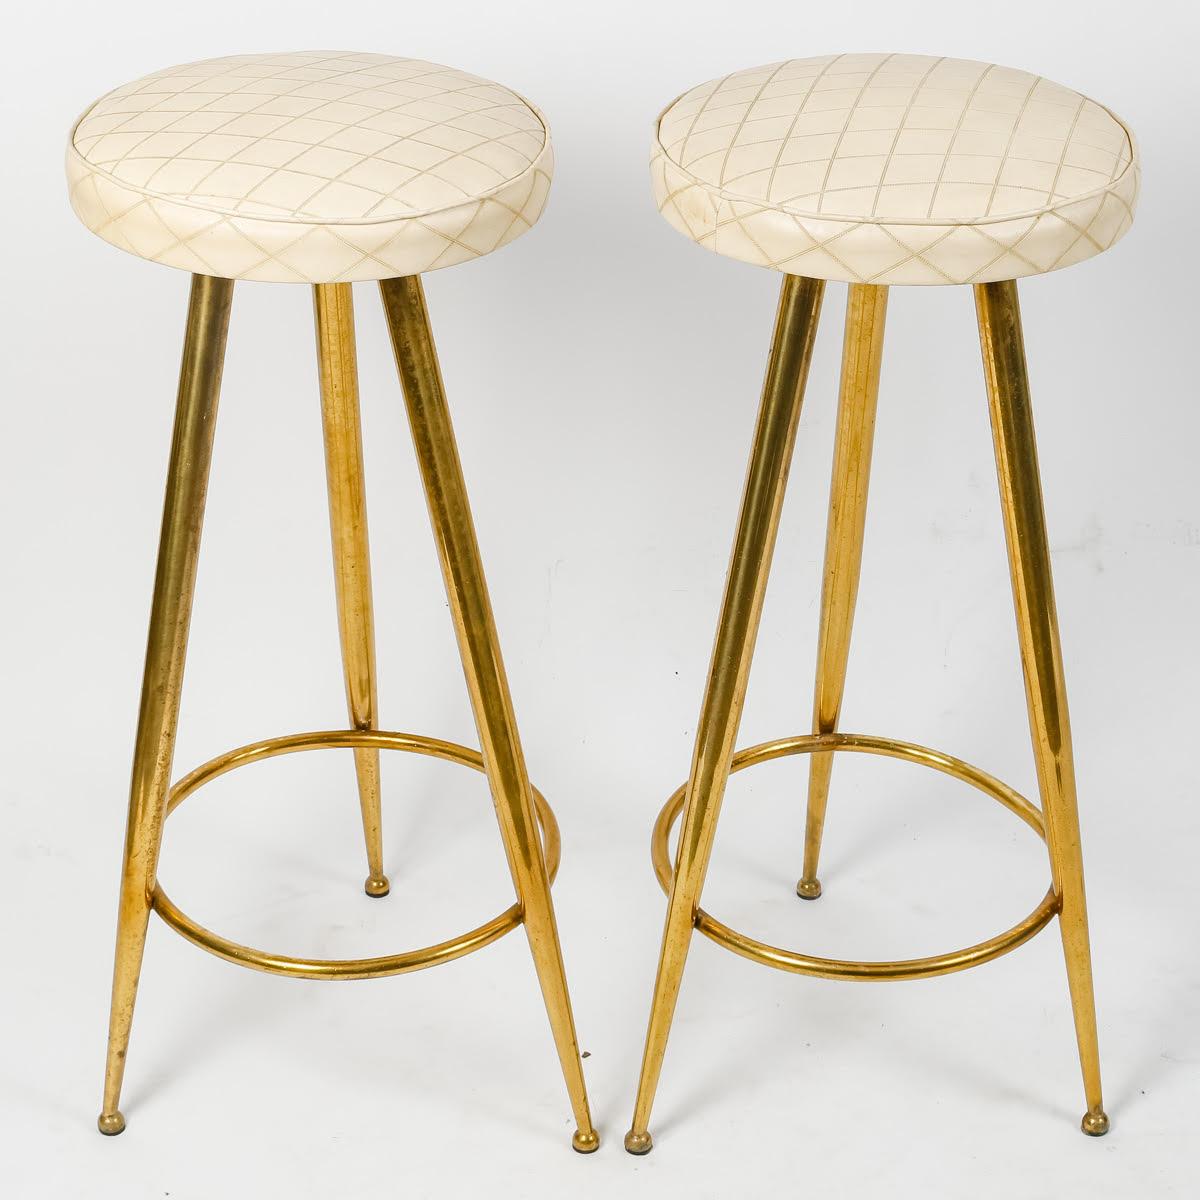 Pair of tripod stools by Gio Ponti (1891-1979).

Pair of brass barstools by Gio Ponti (1891-1979).
h: 80cm, d: 35cm